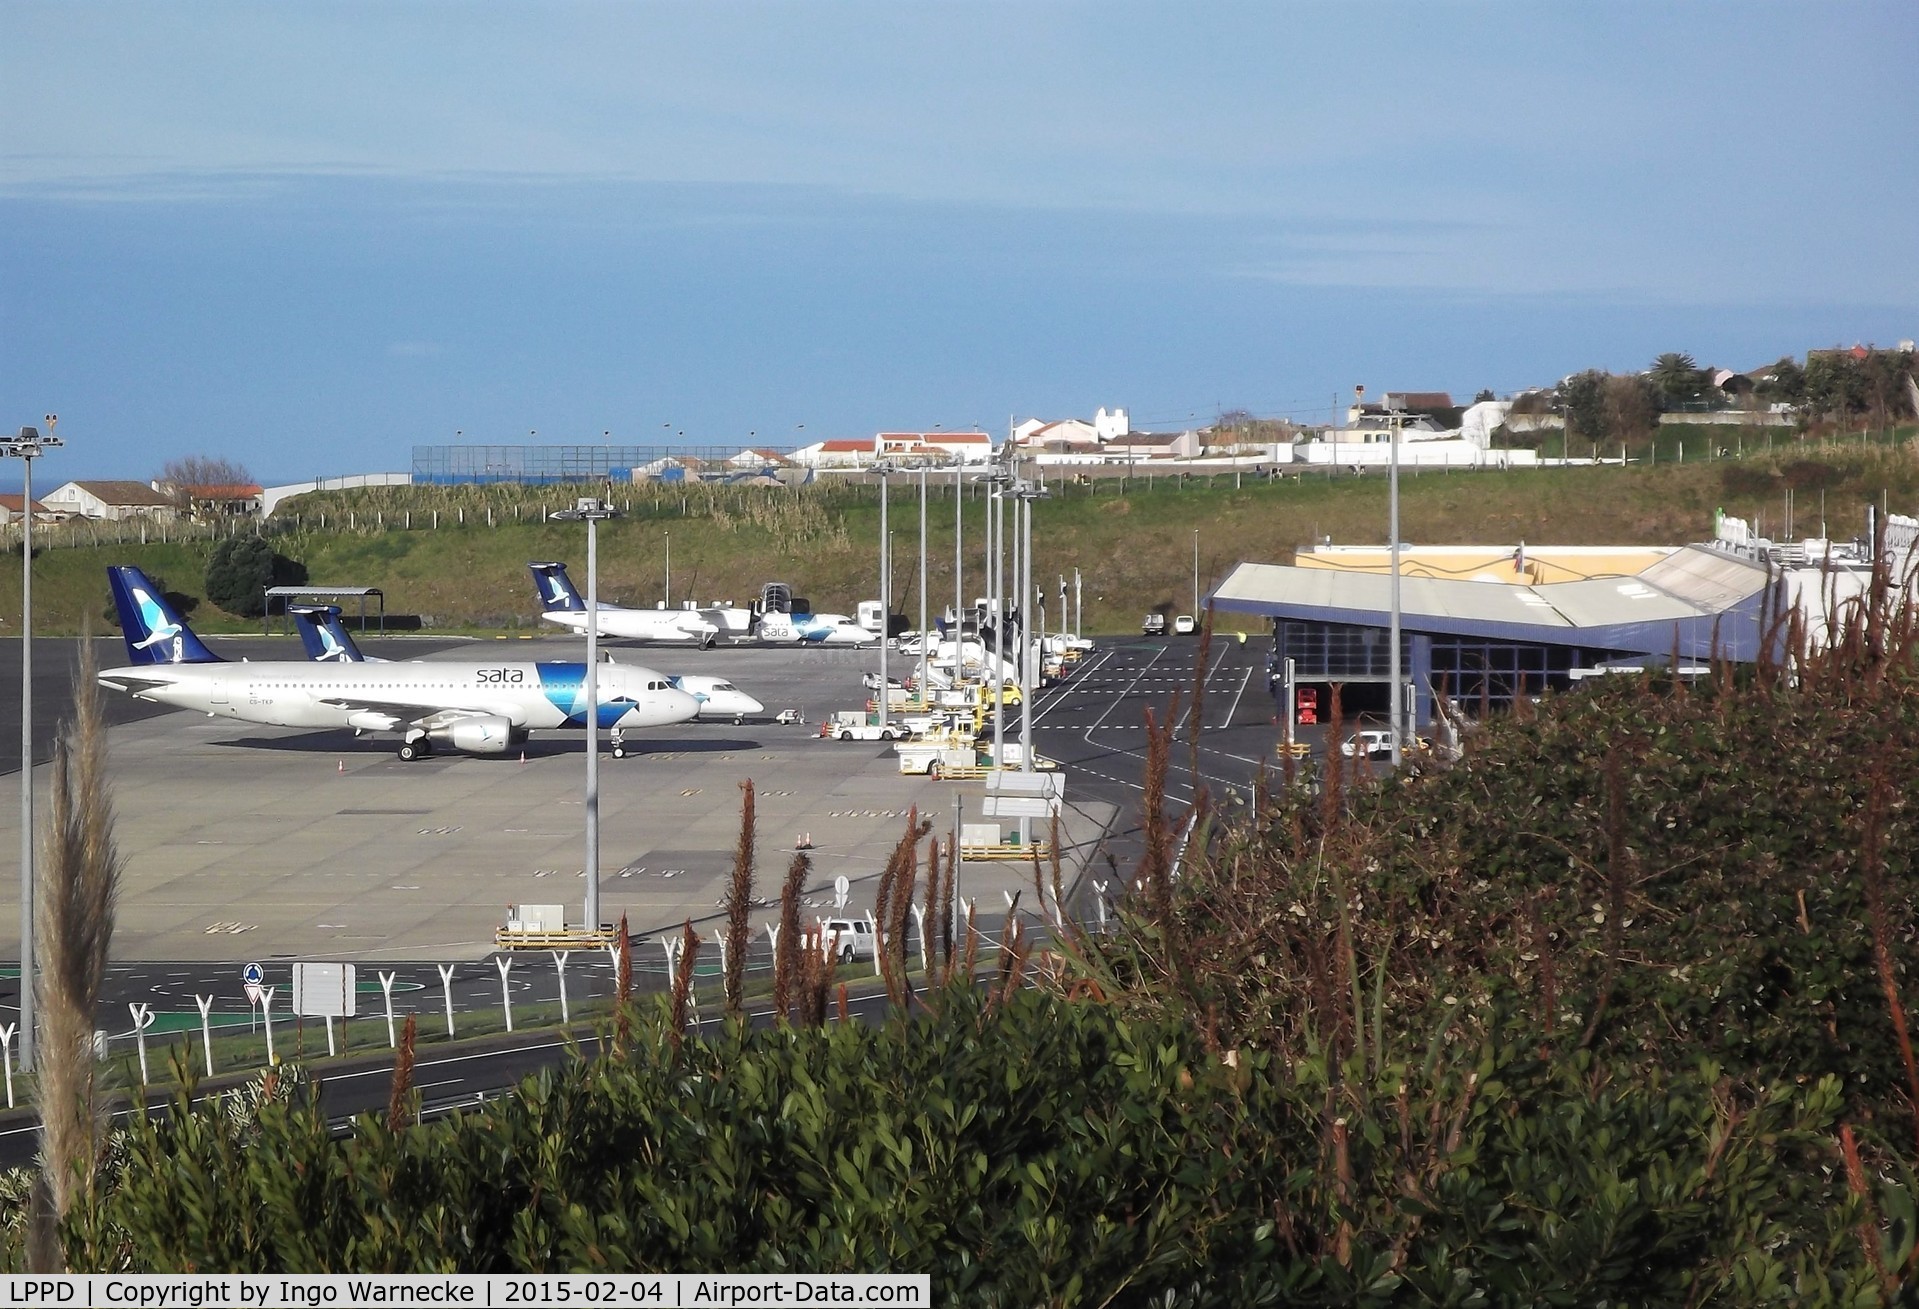 João Paulo II Airport, Ponta Delgada, São Miguel Island Portugal (LPPD) - apron and terminal at Ponta Delgada airport